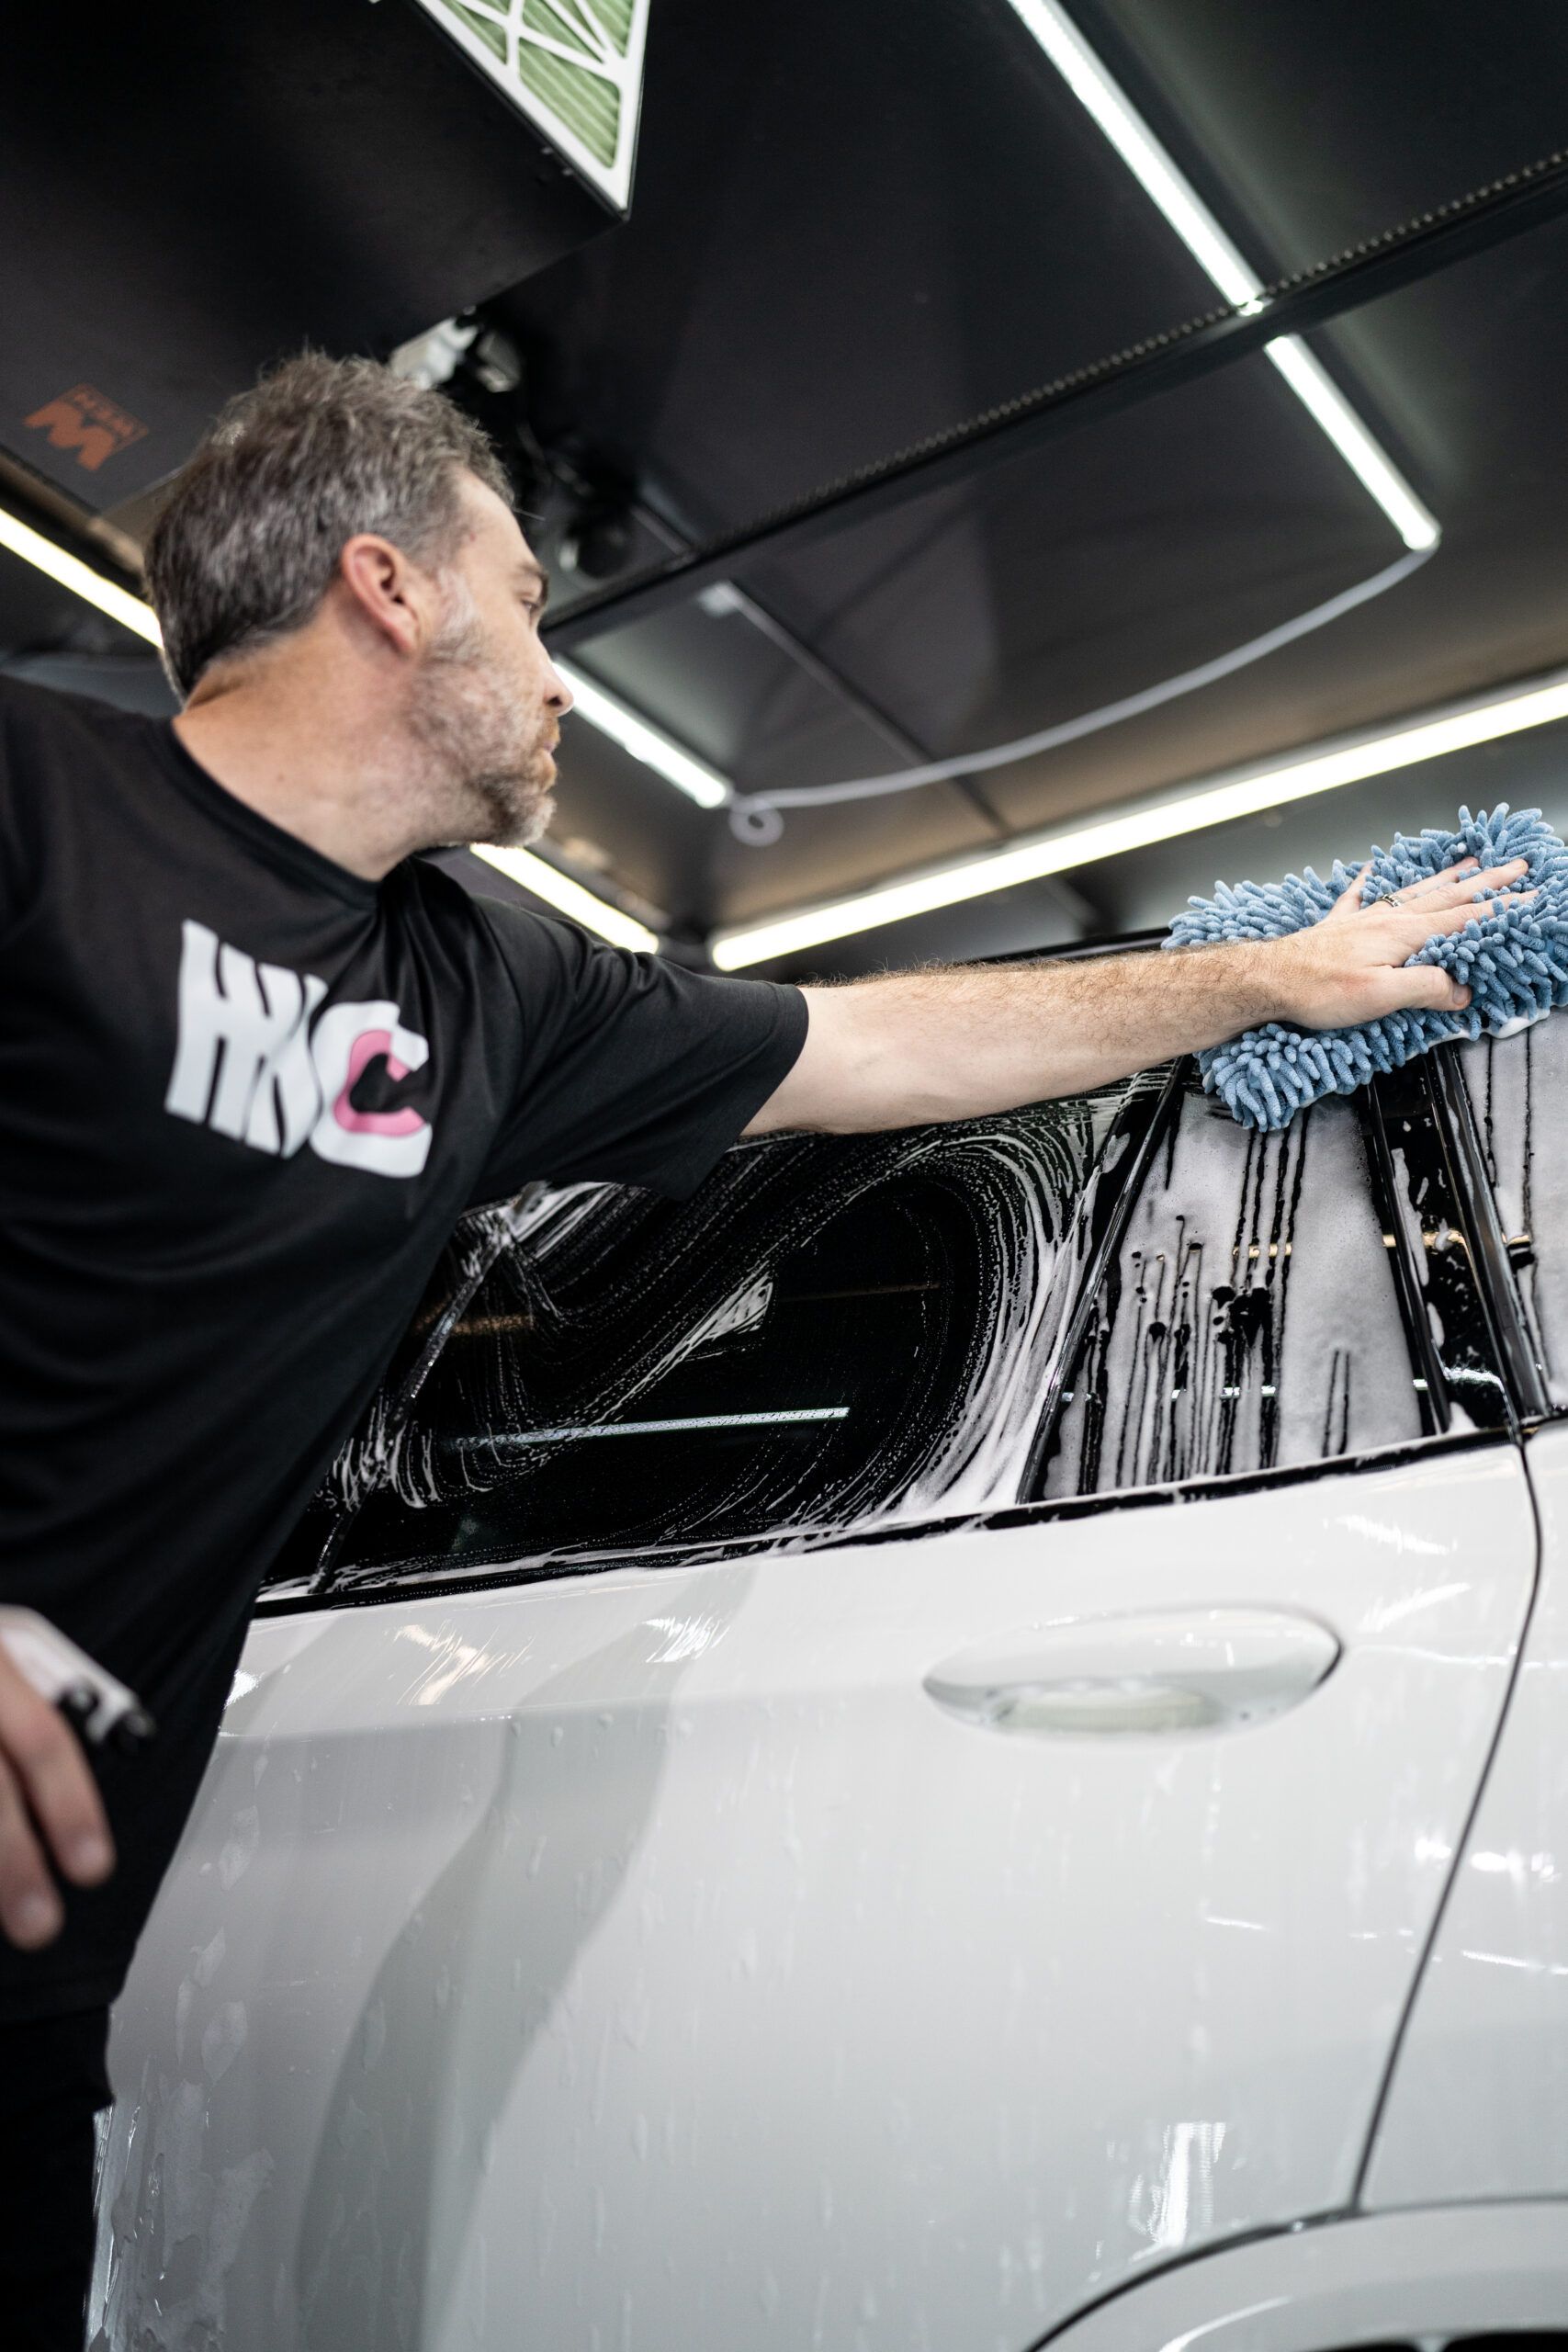 A man is washing a car with a cloth in a garage.